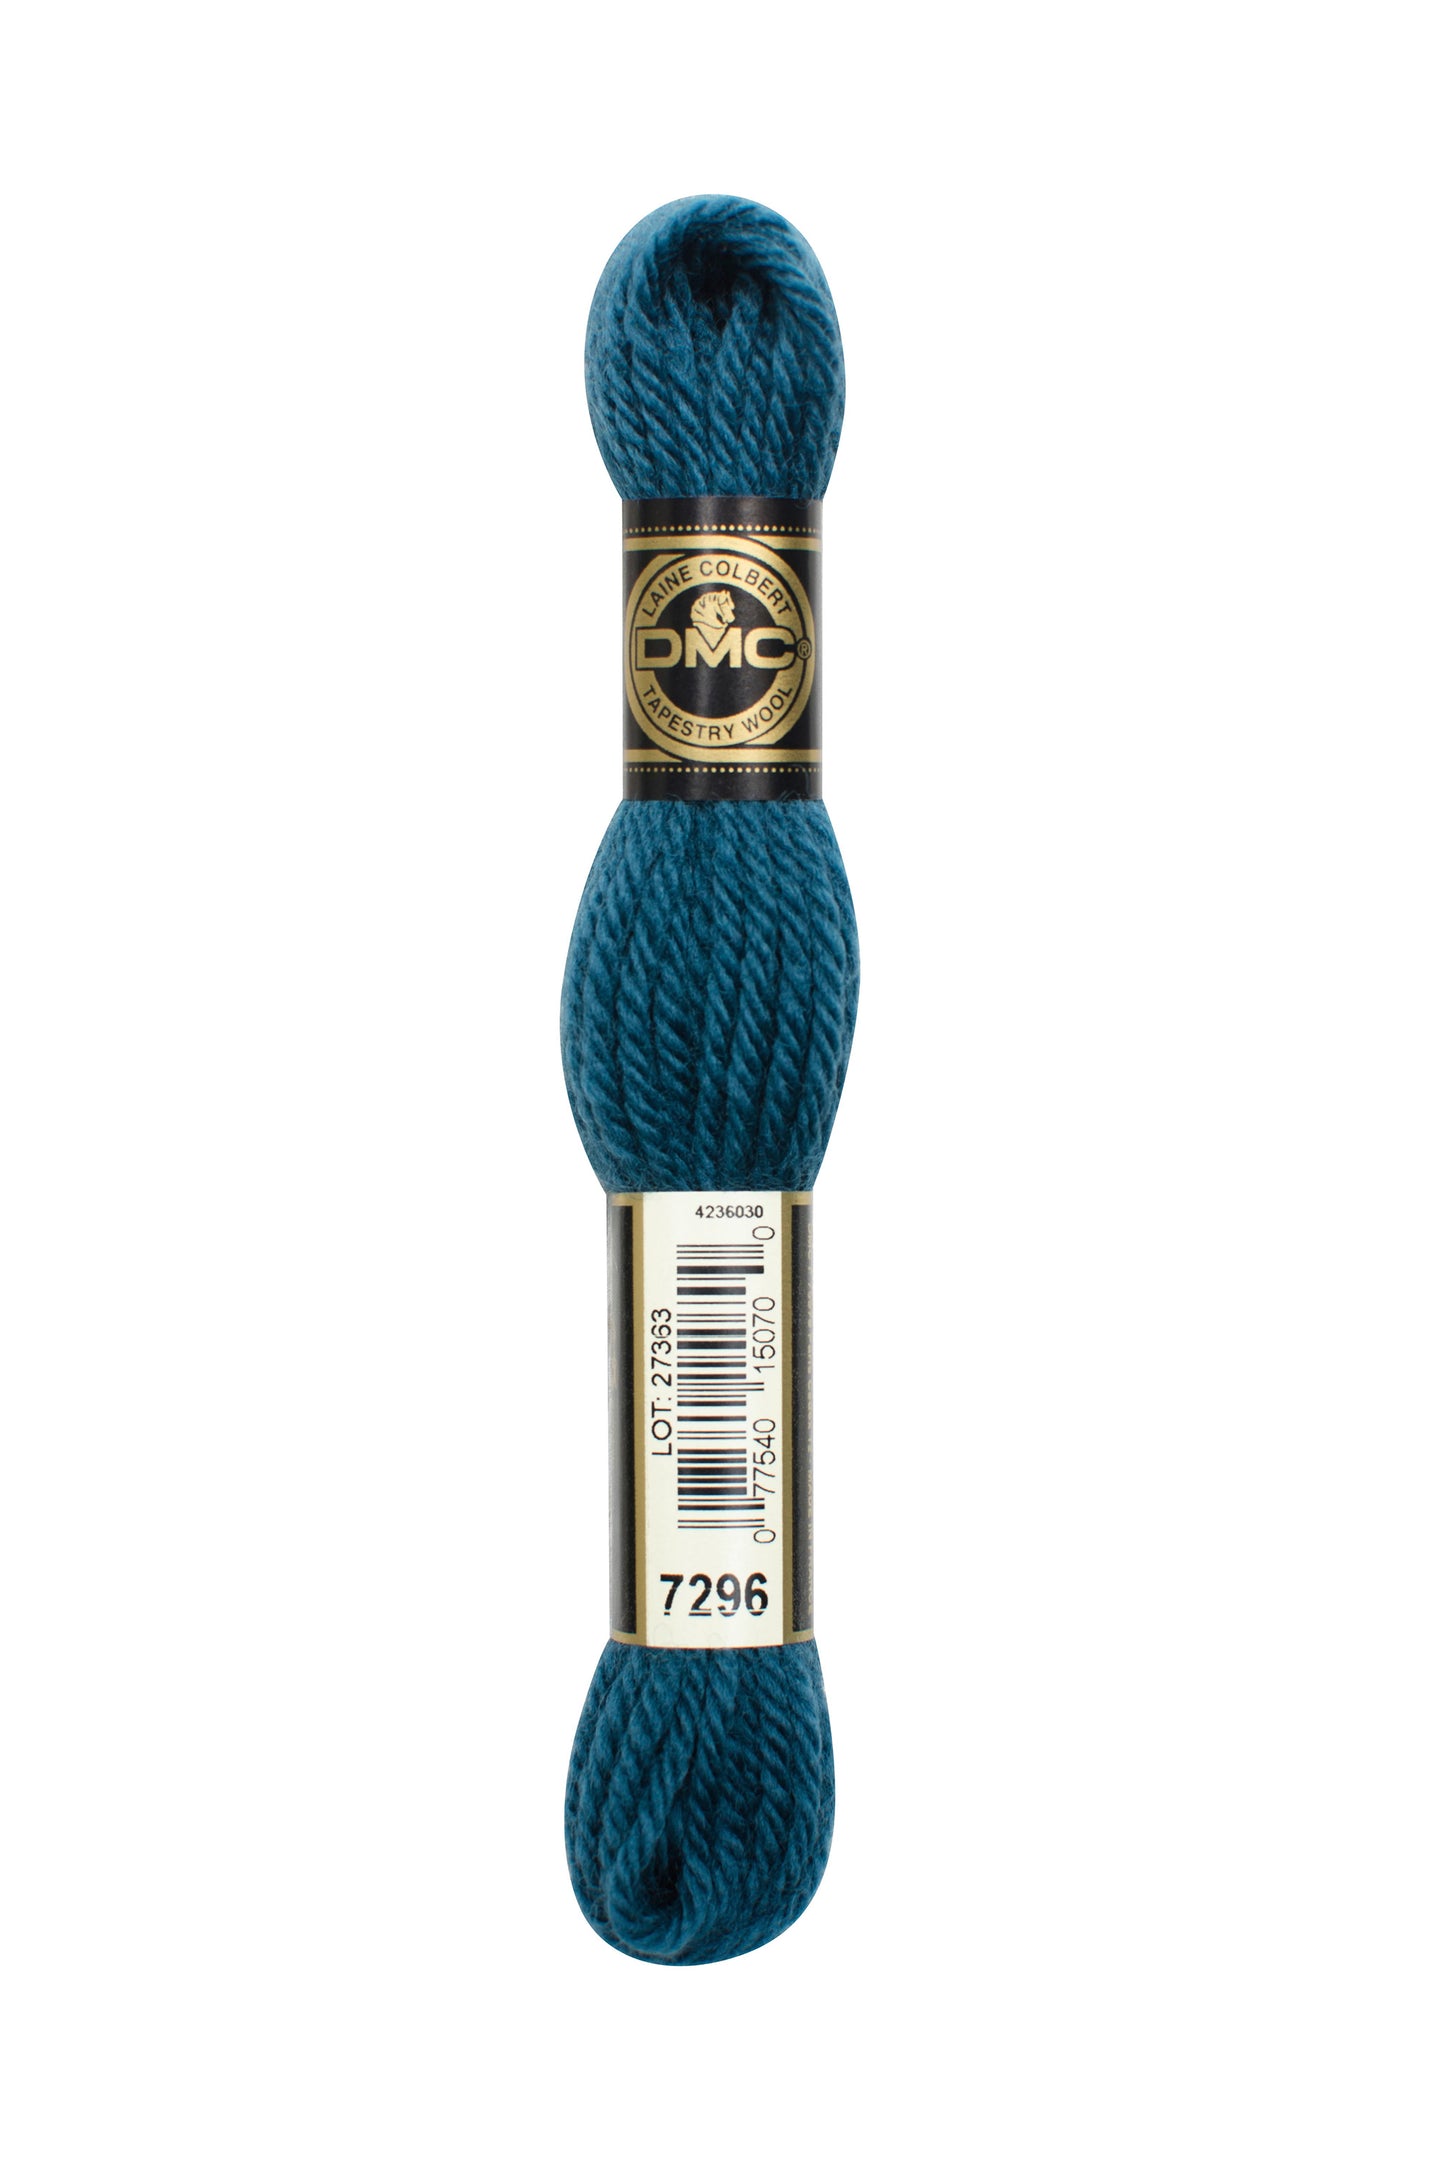 7296 – DMC Tapestry Wool